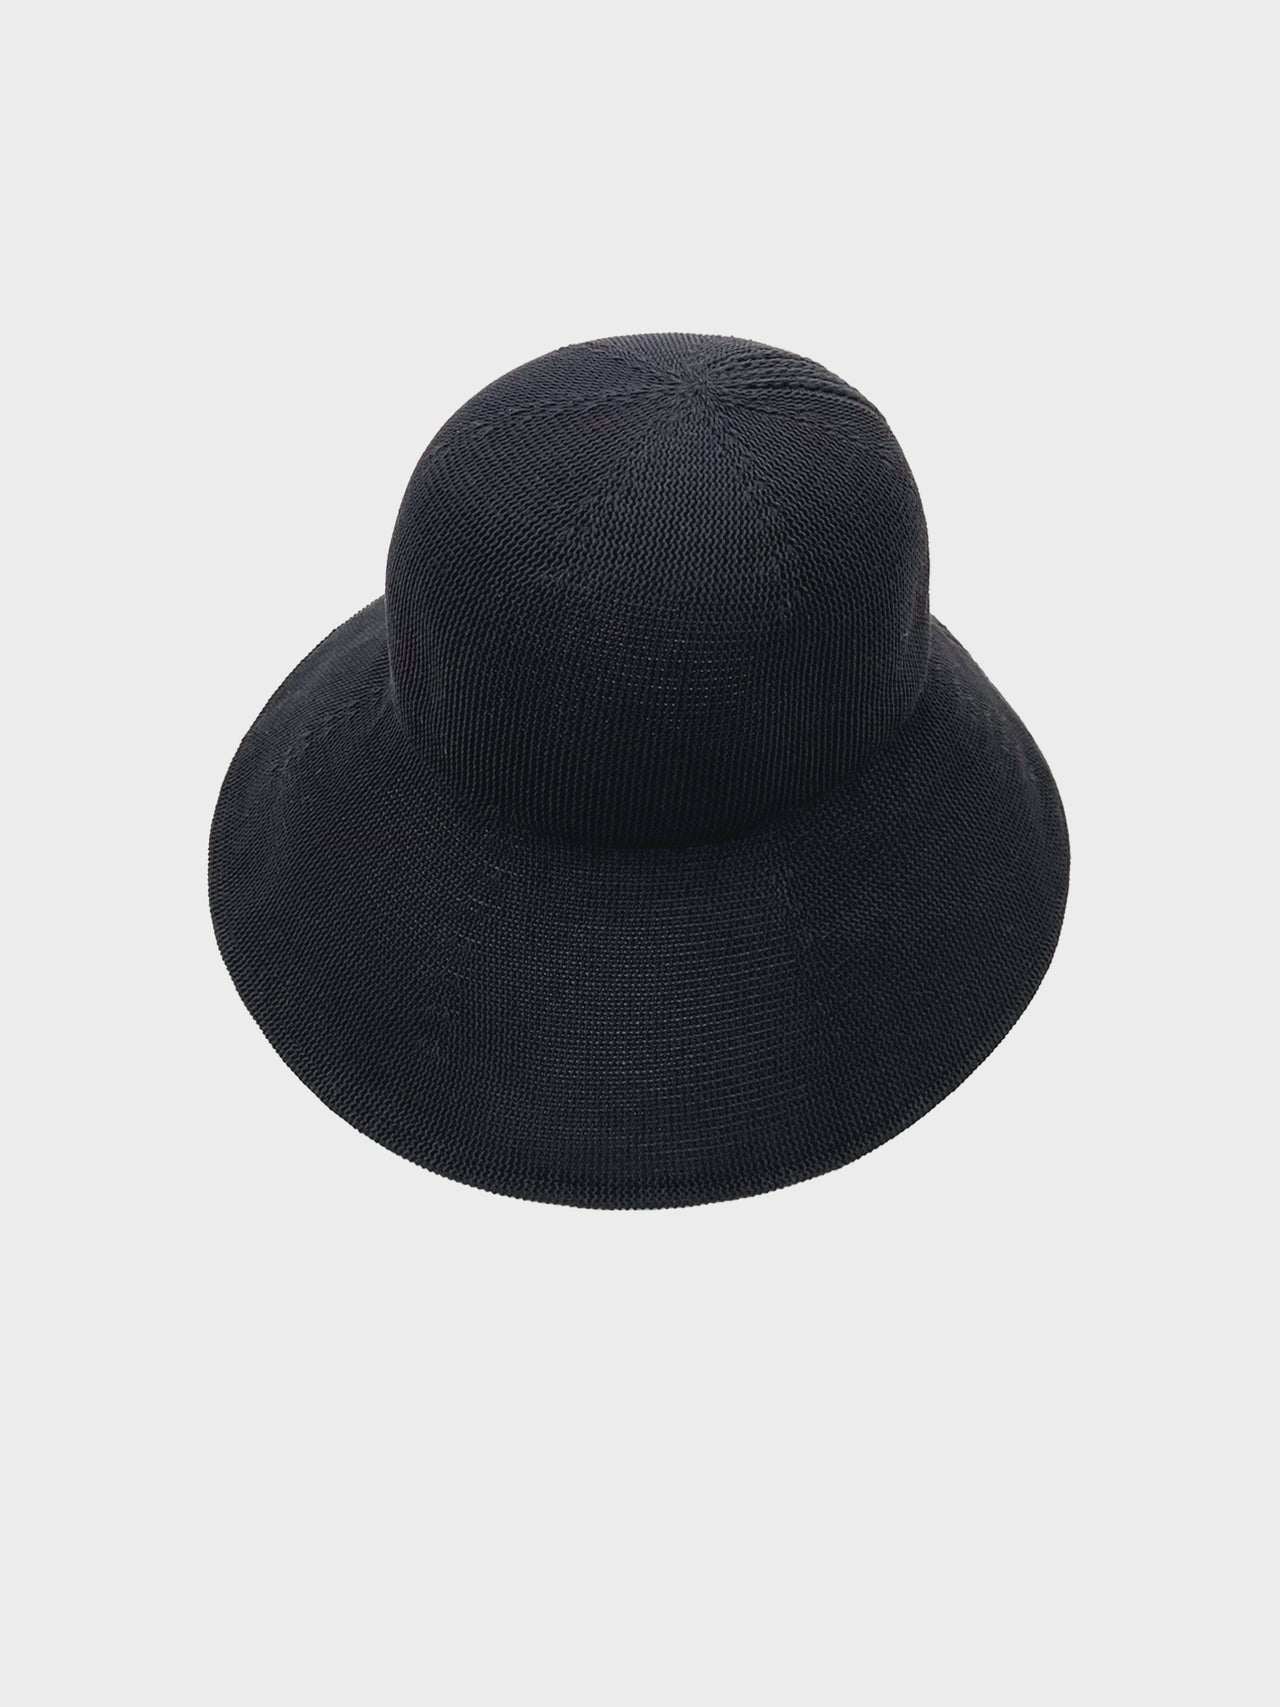 CFCL / MESH KNIT FLOPPY HAT (BLACK)